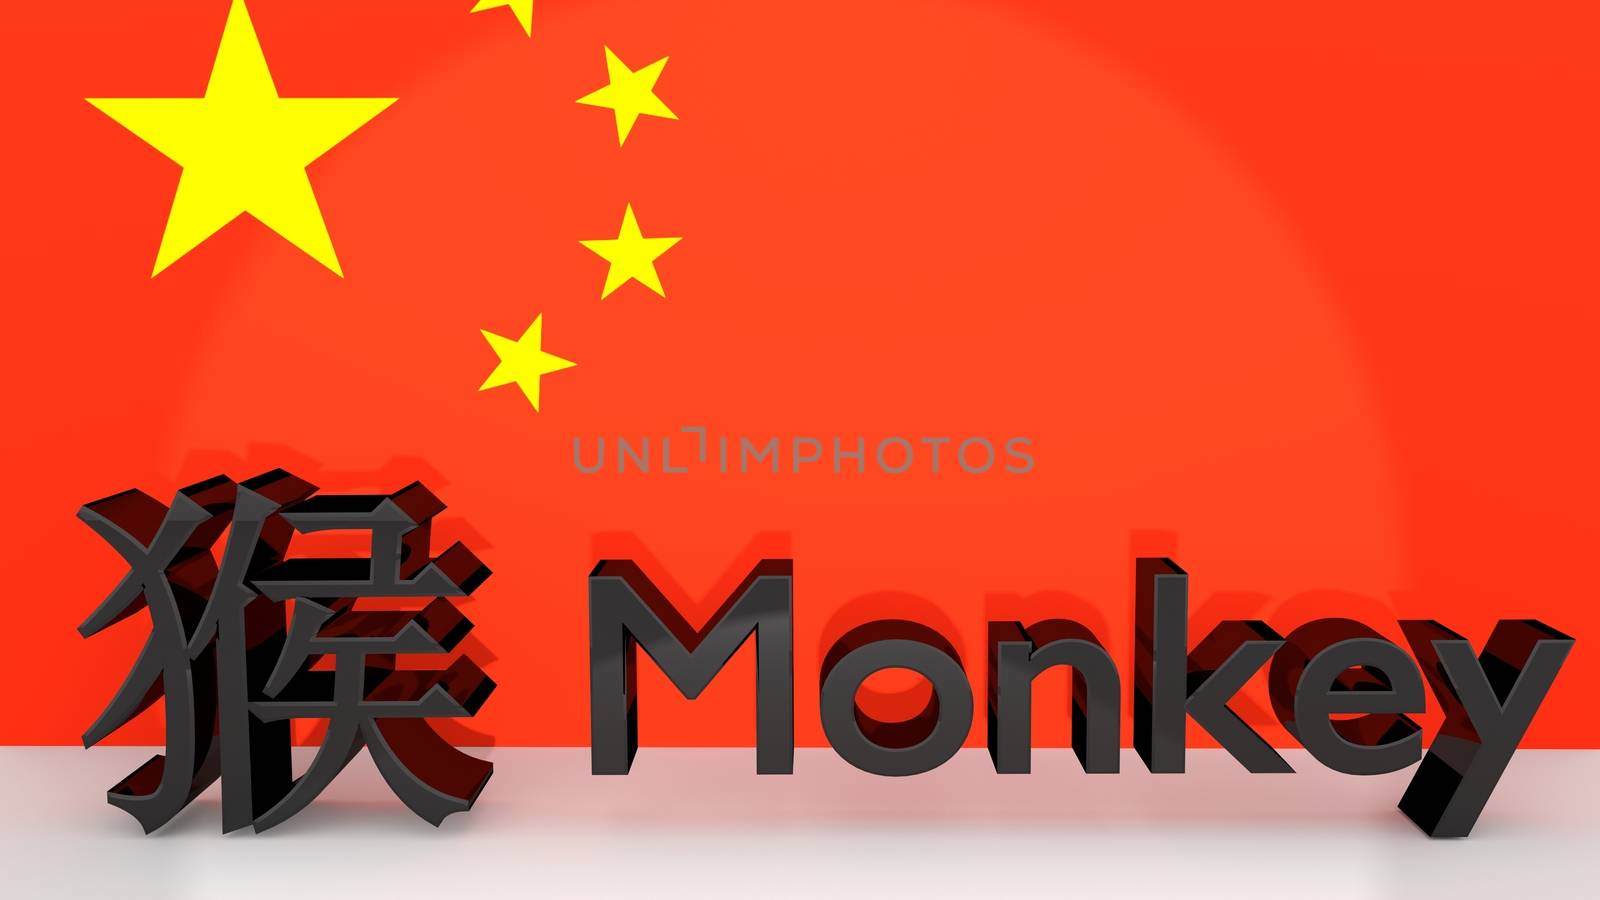 Chinese Zodiac Sign Monkey with translation by MarkDw